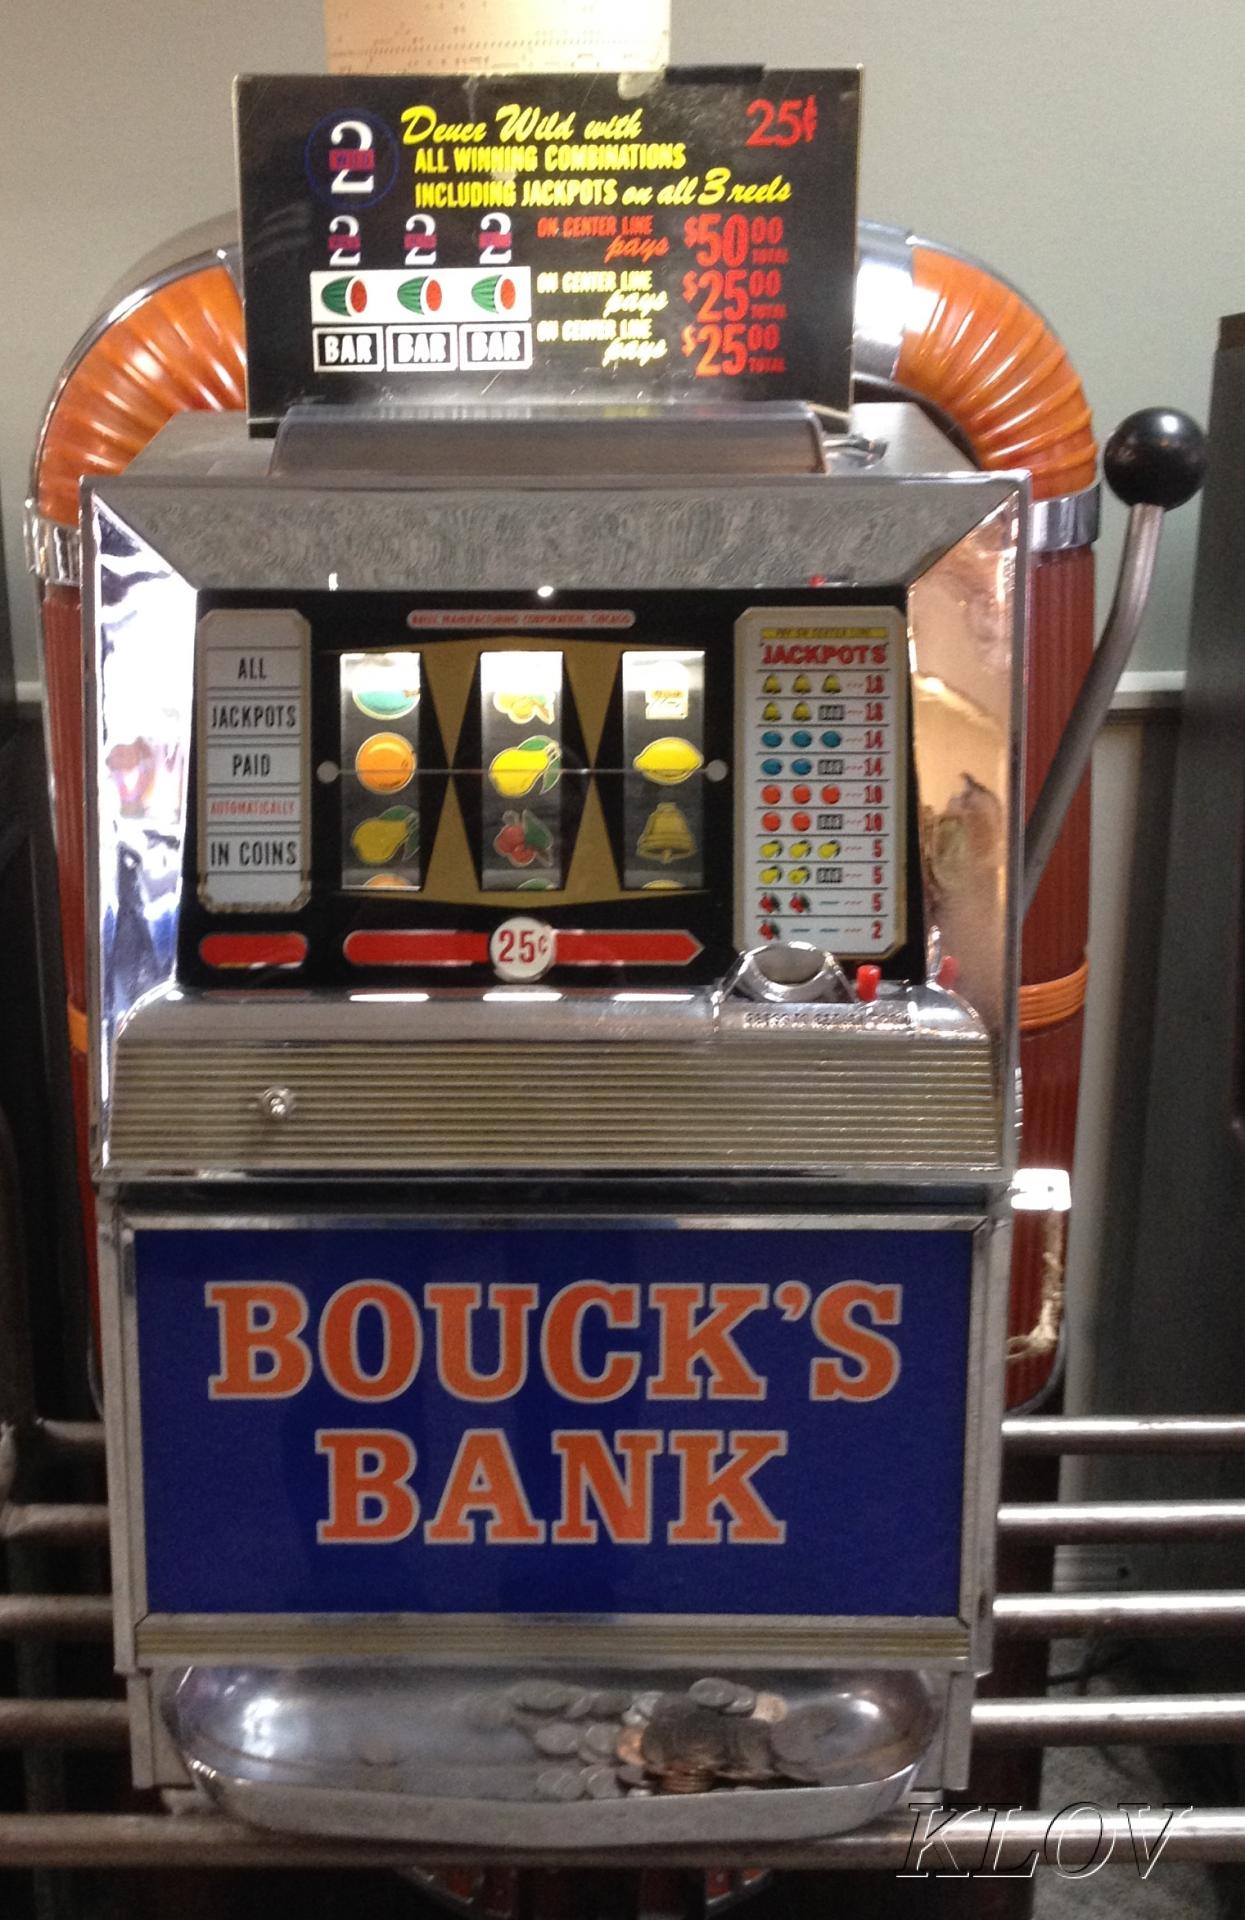 wild deuce slot machine